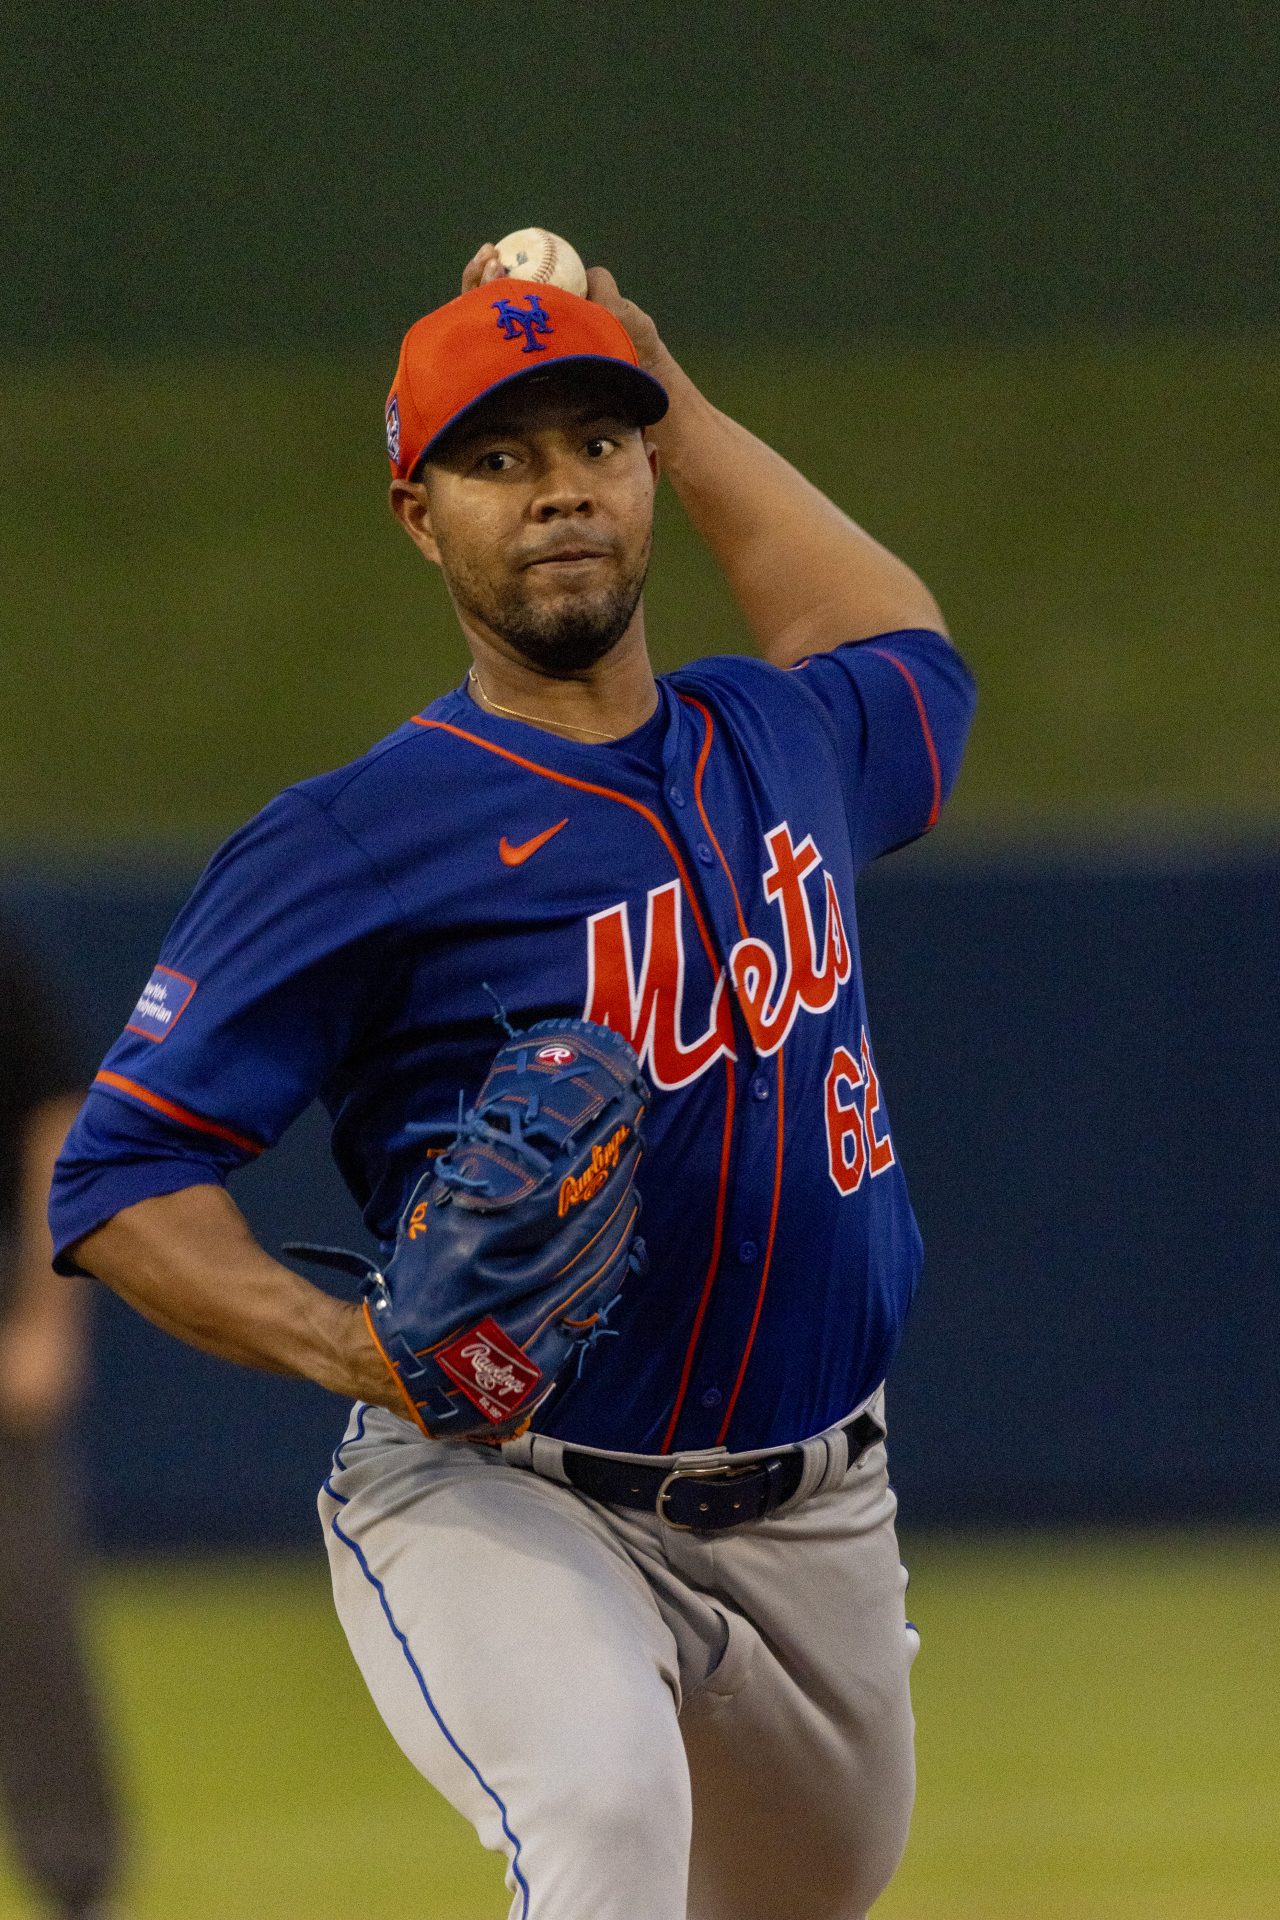 22. Jose Quintana, New York Mets